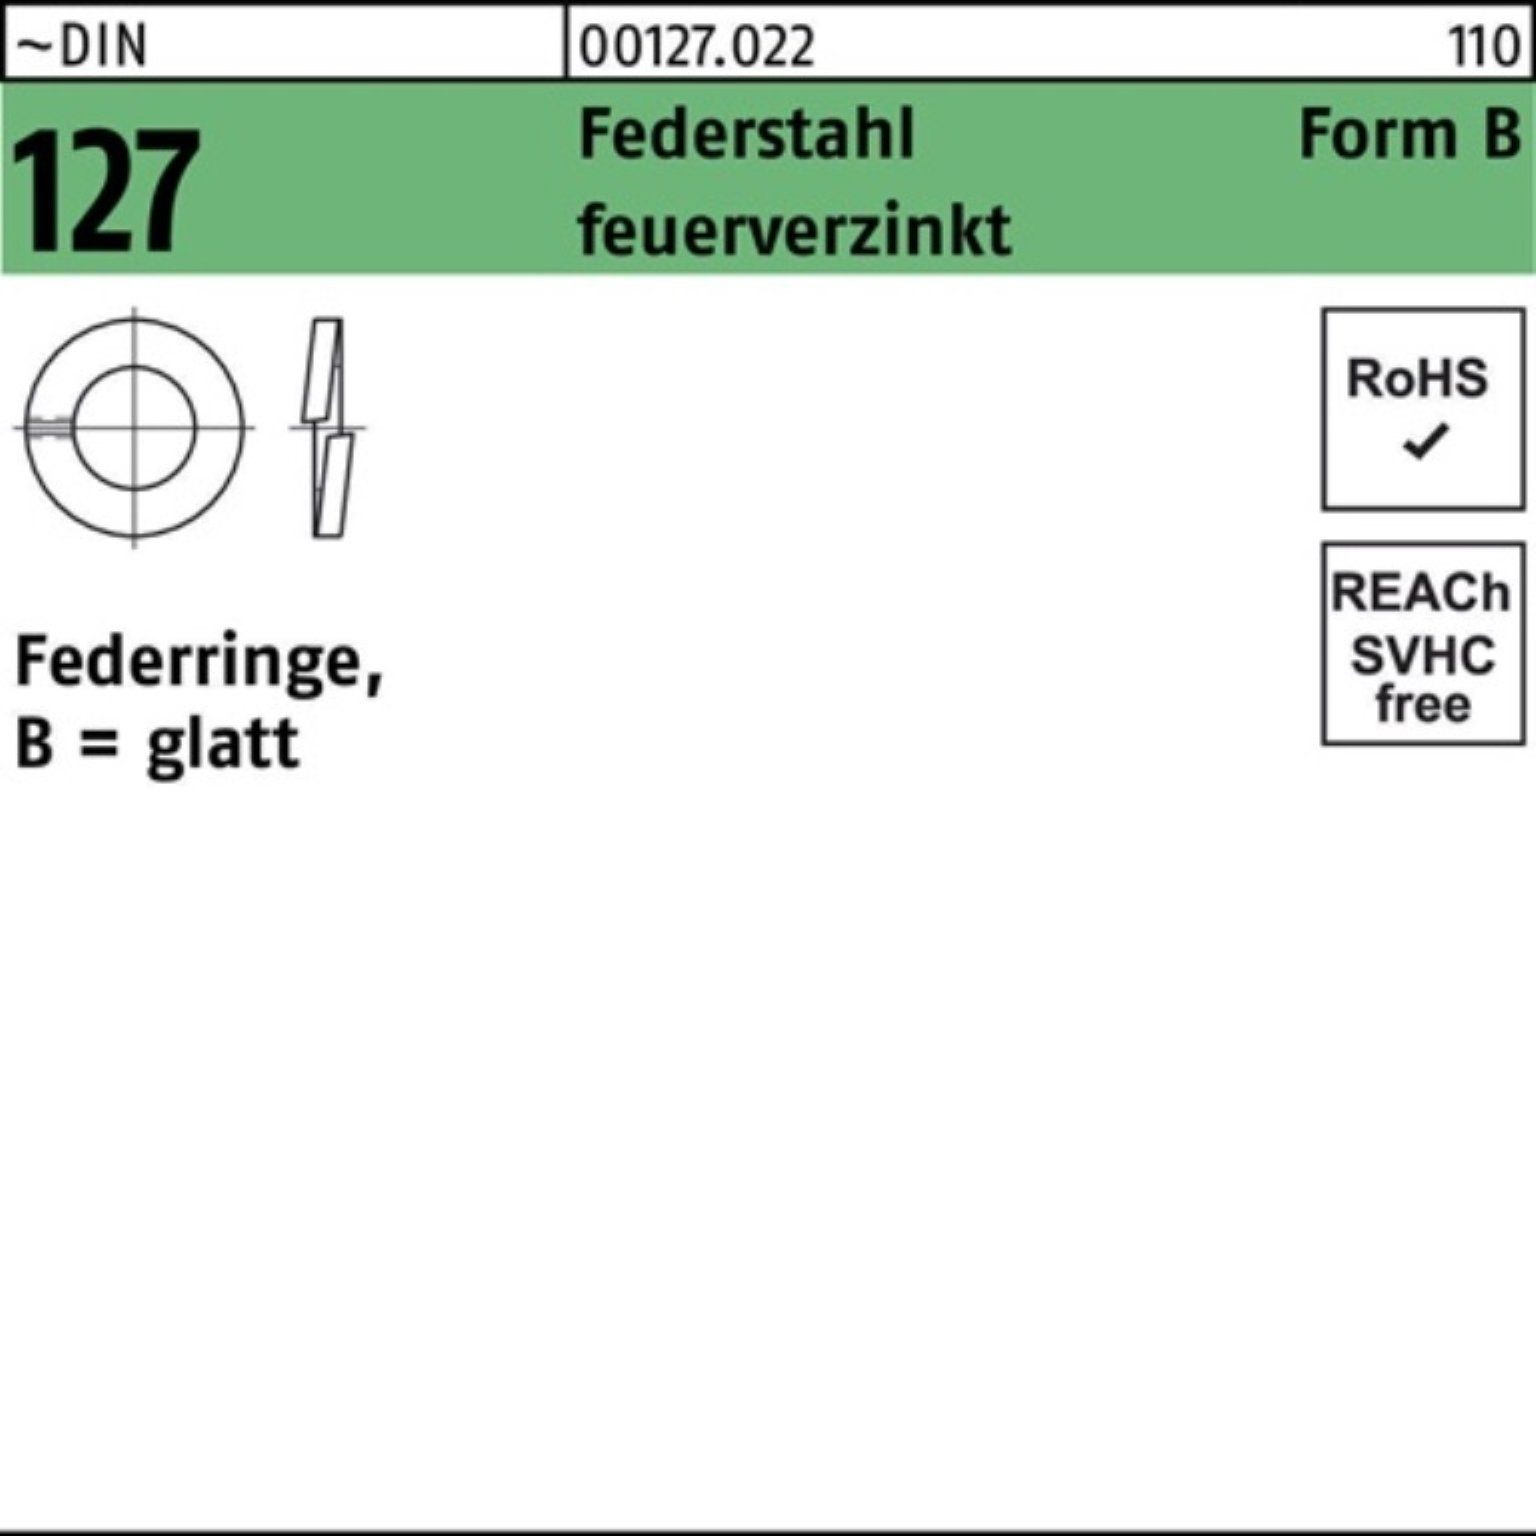 127 16 250 B 250er Federring Reyher ~DI Pack DIN Federring Stück Federstahl feuerverz.